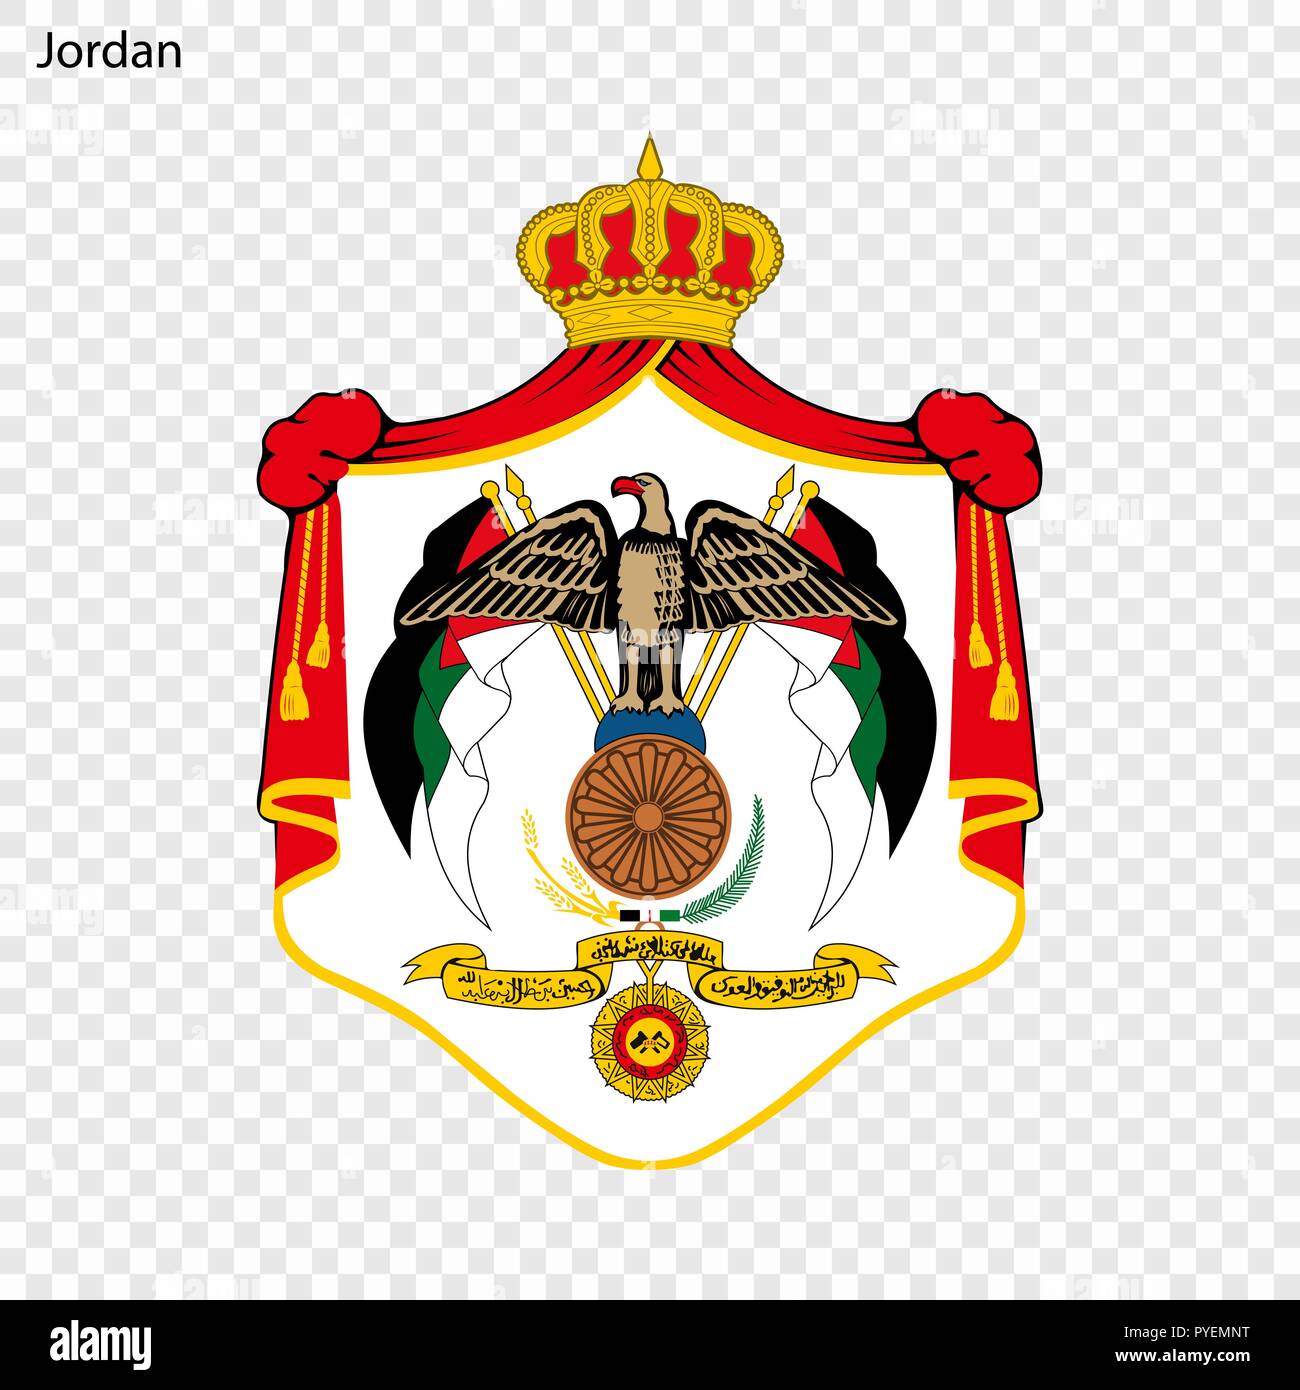 Symbol Of Jordan Fotos e Imágenes de stock - Alamy